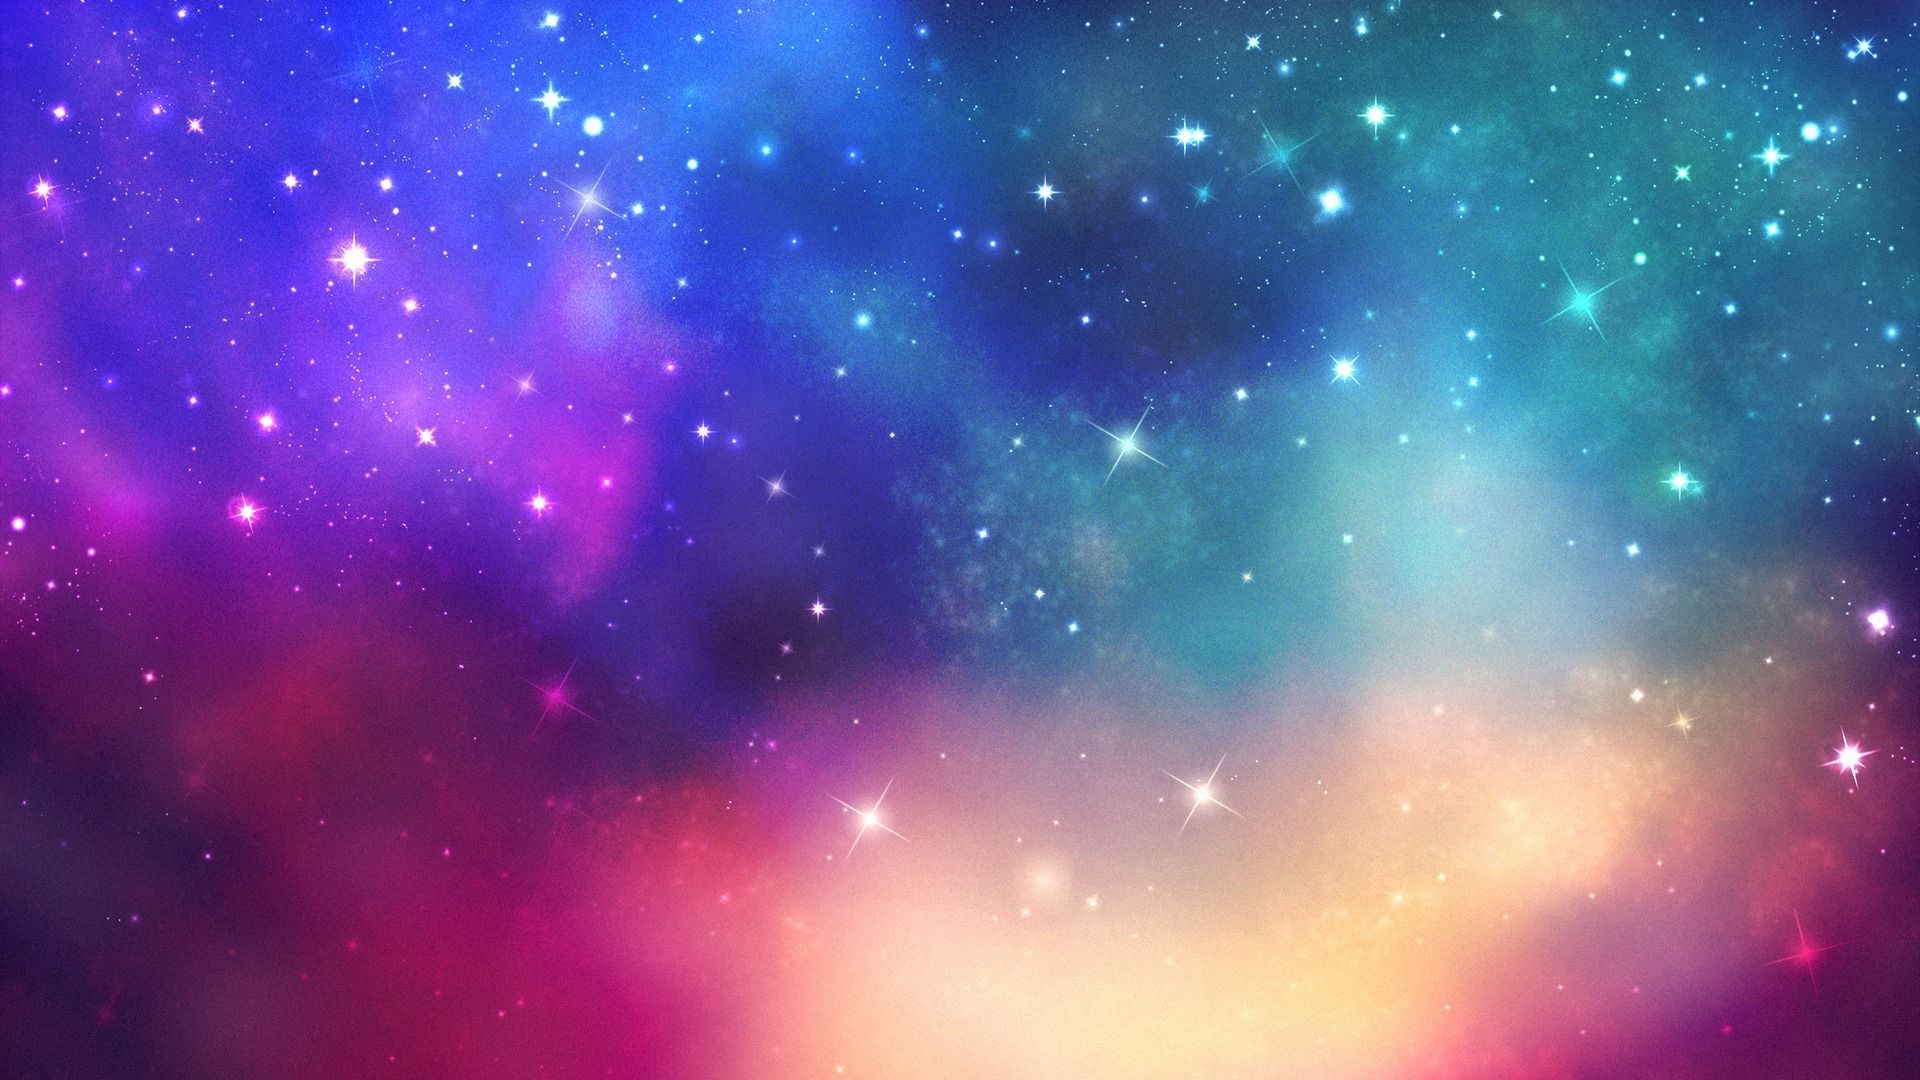 Galaxy theme wallpaper, Cosmic inspiration, Enchanting visuals, Mystical atmosphere, 1920x1080 Full HD Desktop